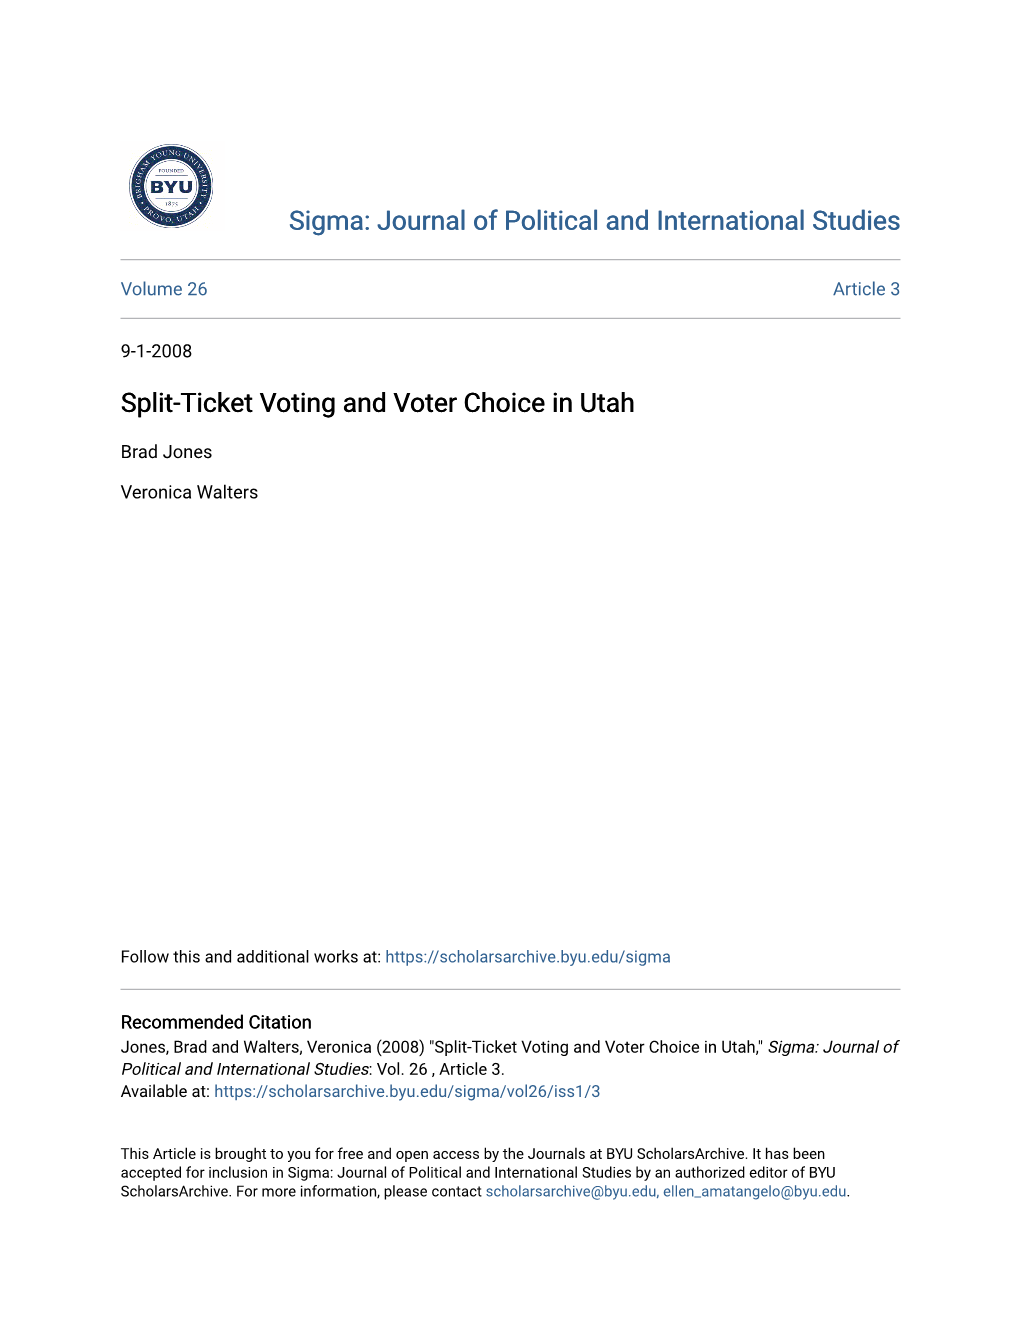 Split-Ticket Voting and Voter Choice in Utah